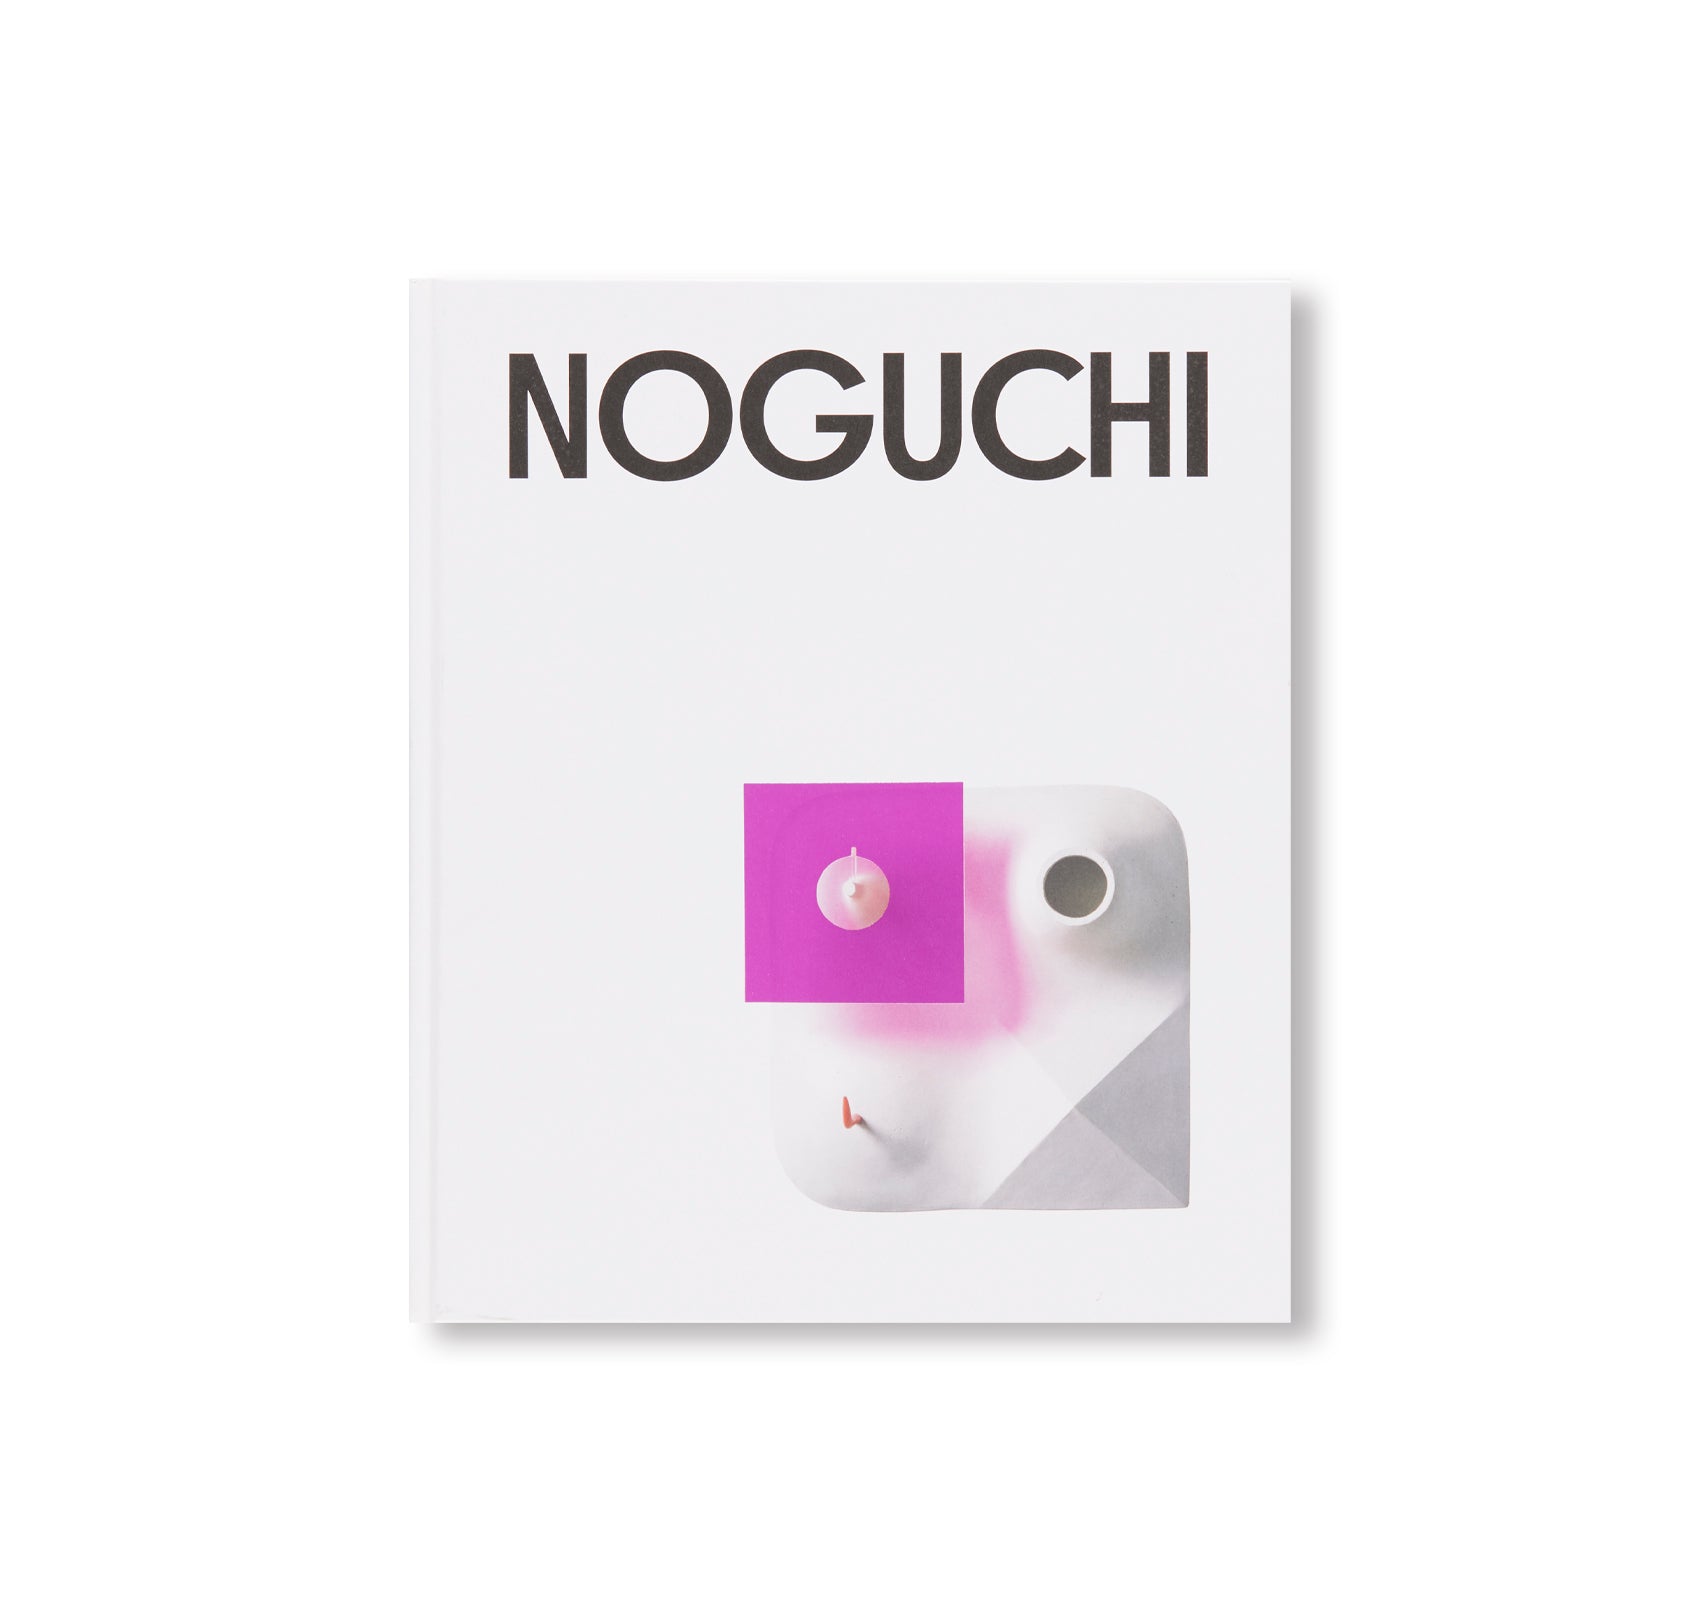 ISAMU NOGUCHI by Isamu Noguchi [HARDCOVER]